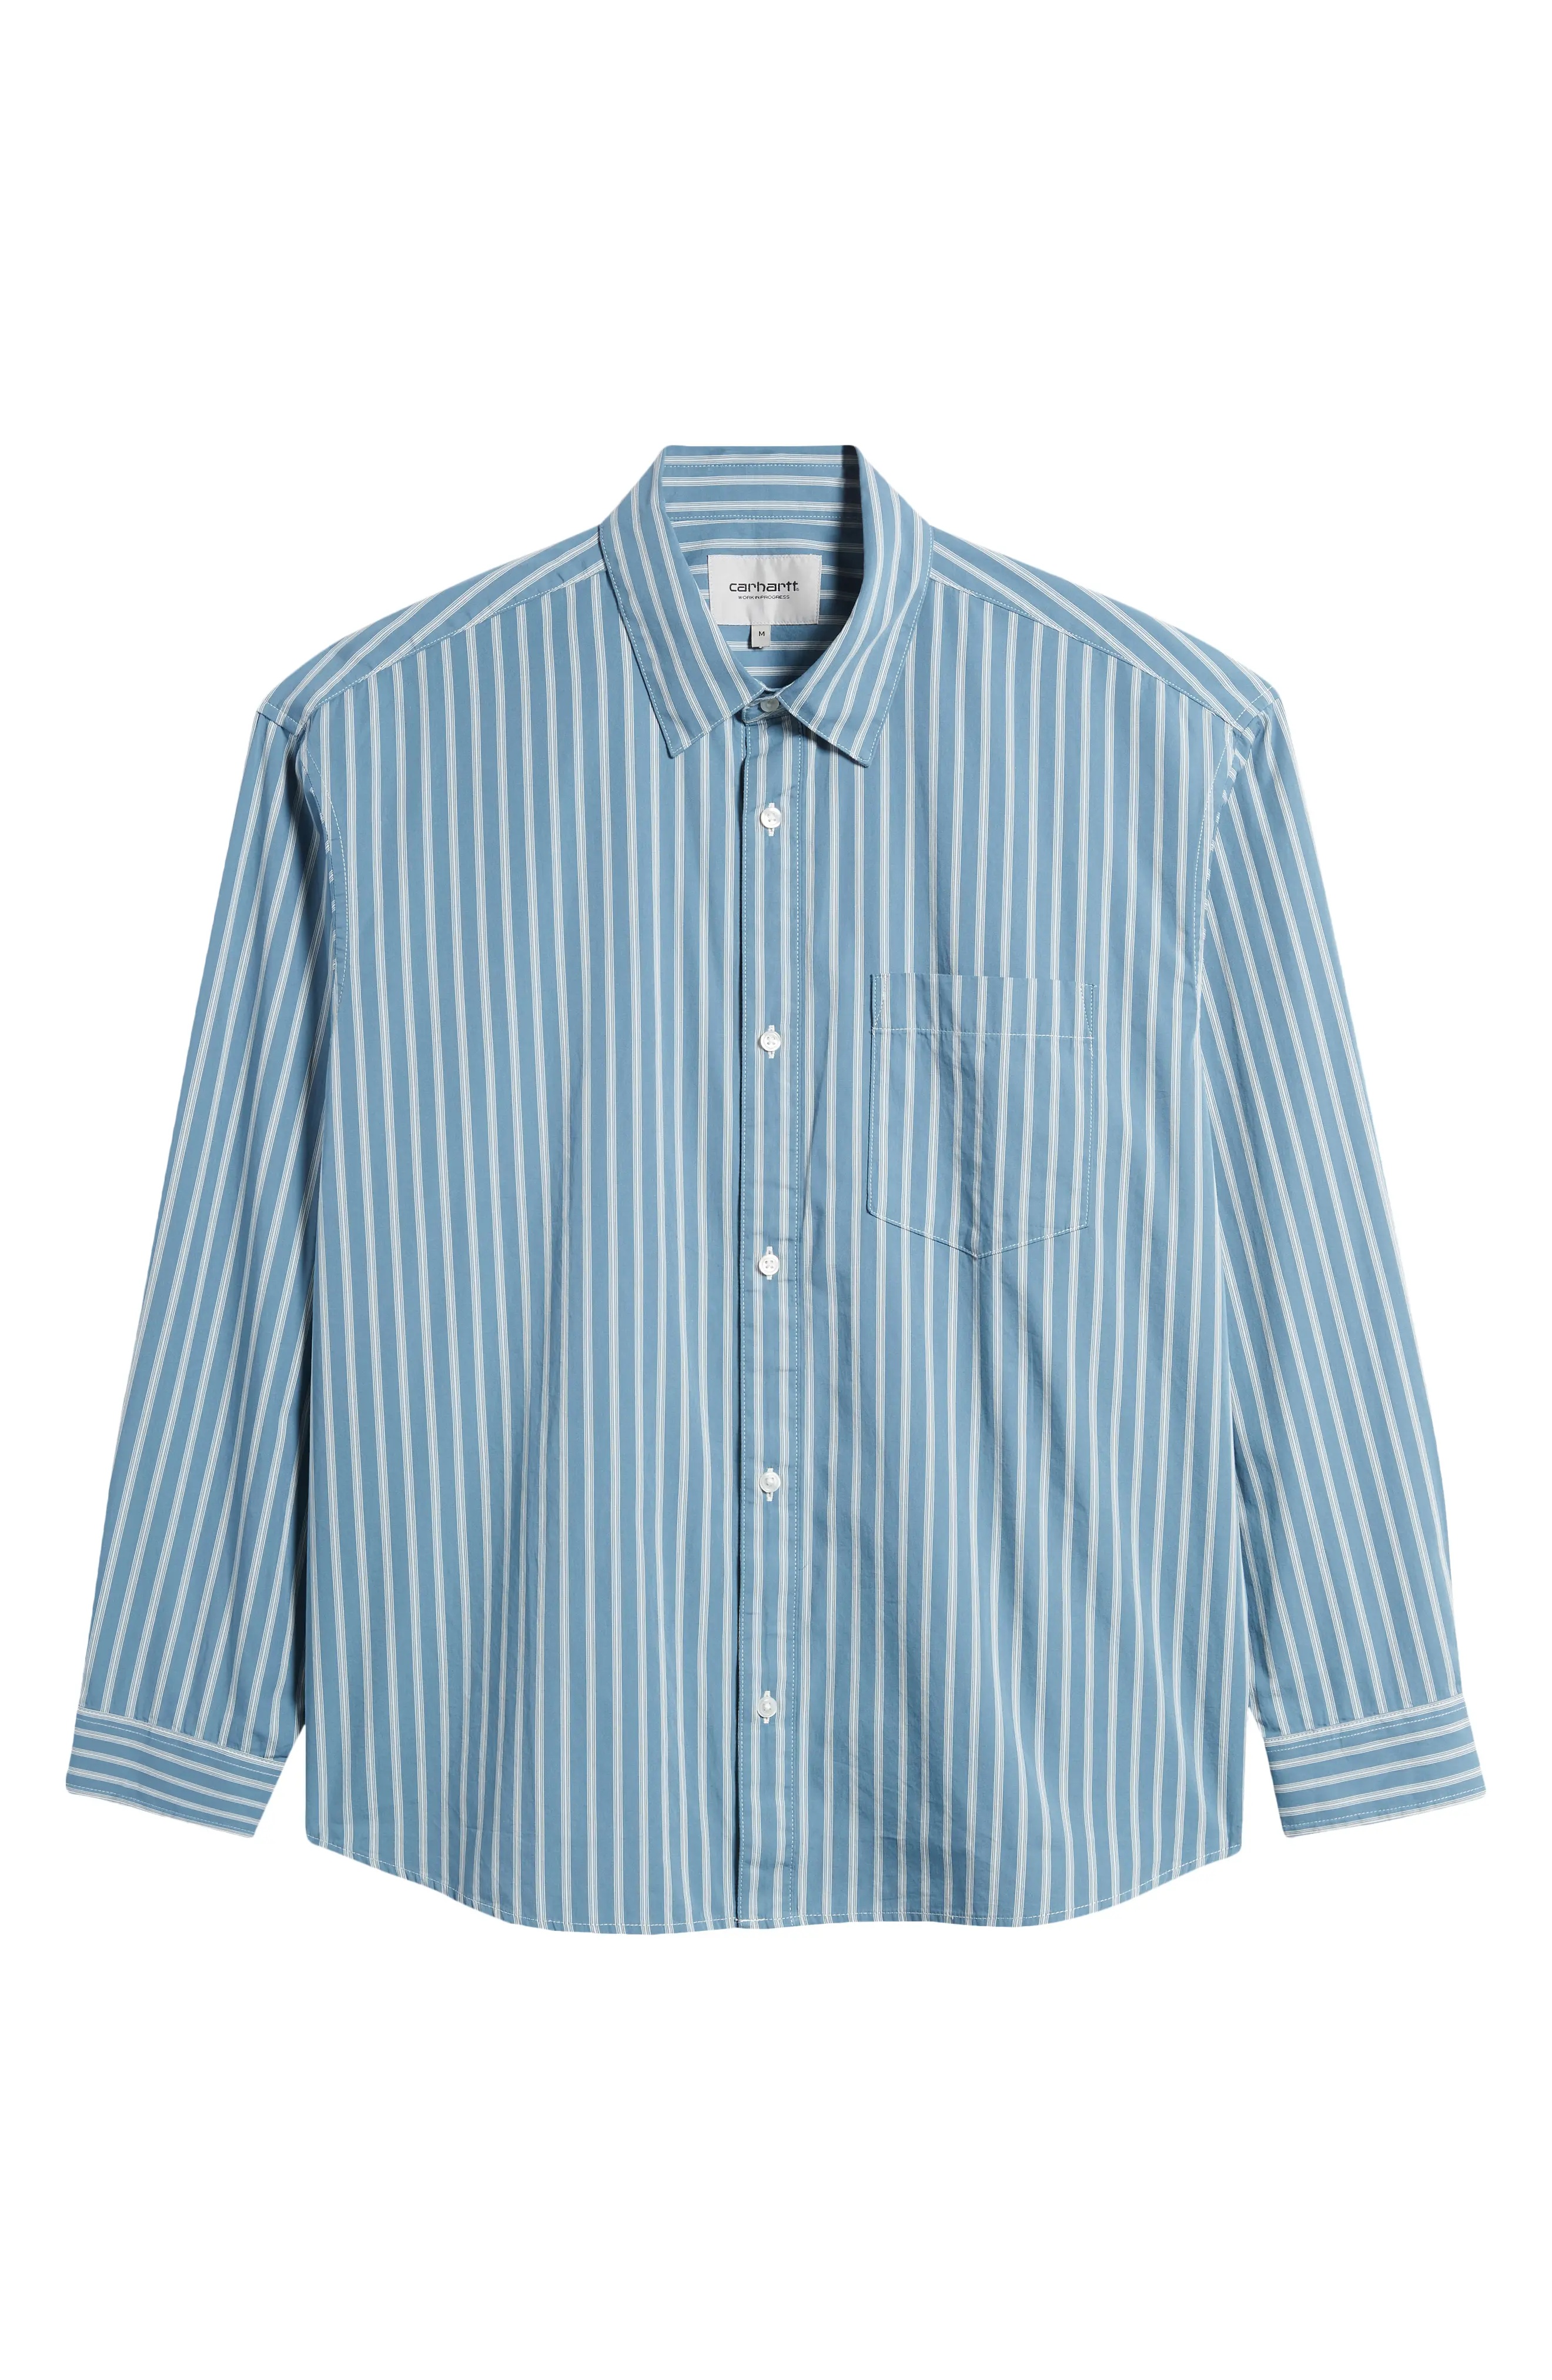 Ligety Stripe Button-Up Shirt in Ligety Stripe Blue/Wax - 6